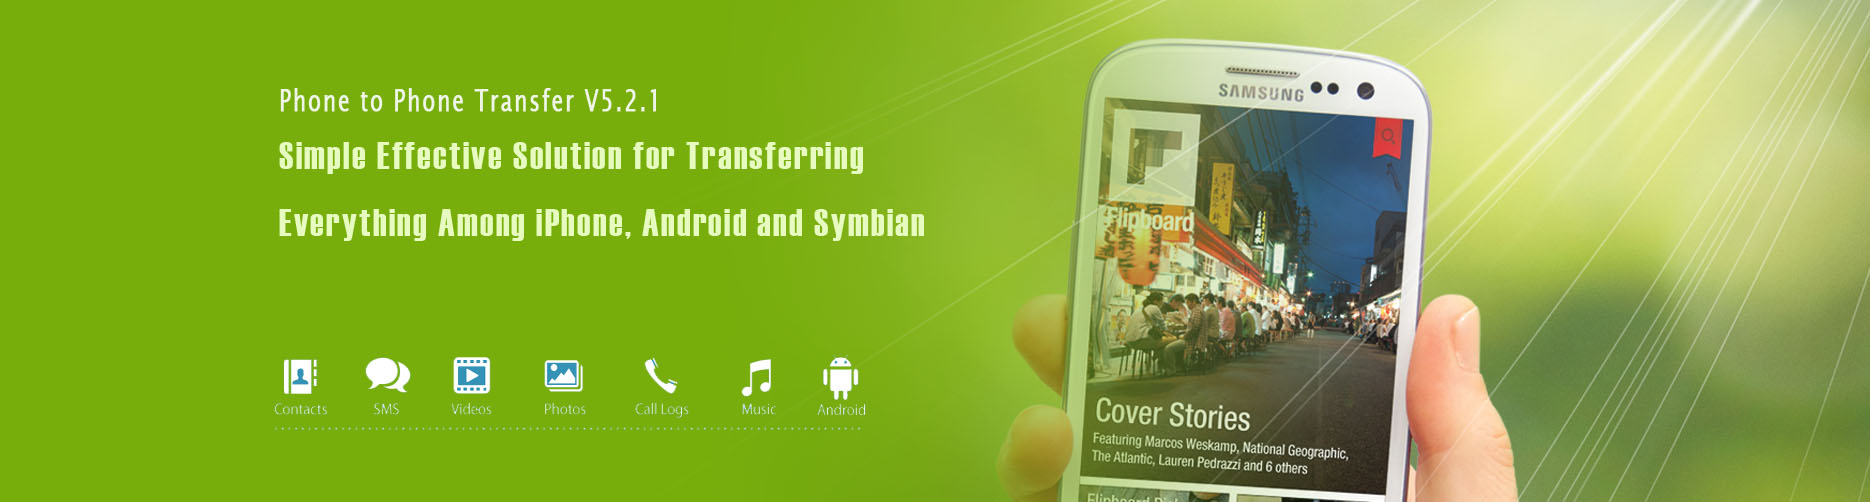 mobile phone Transfer Software Banner